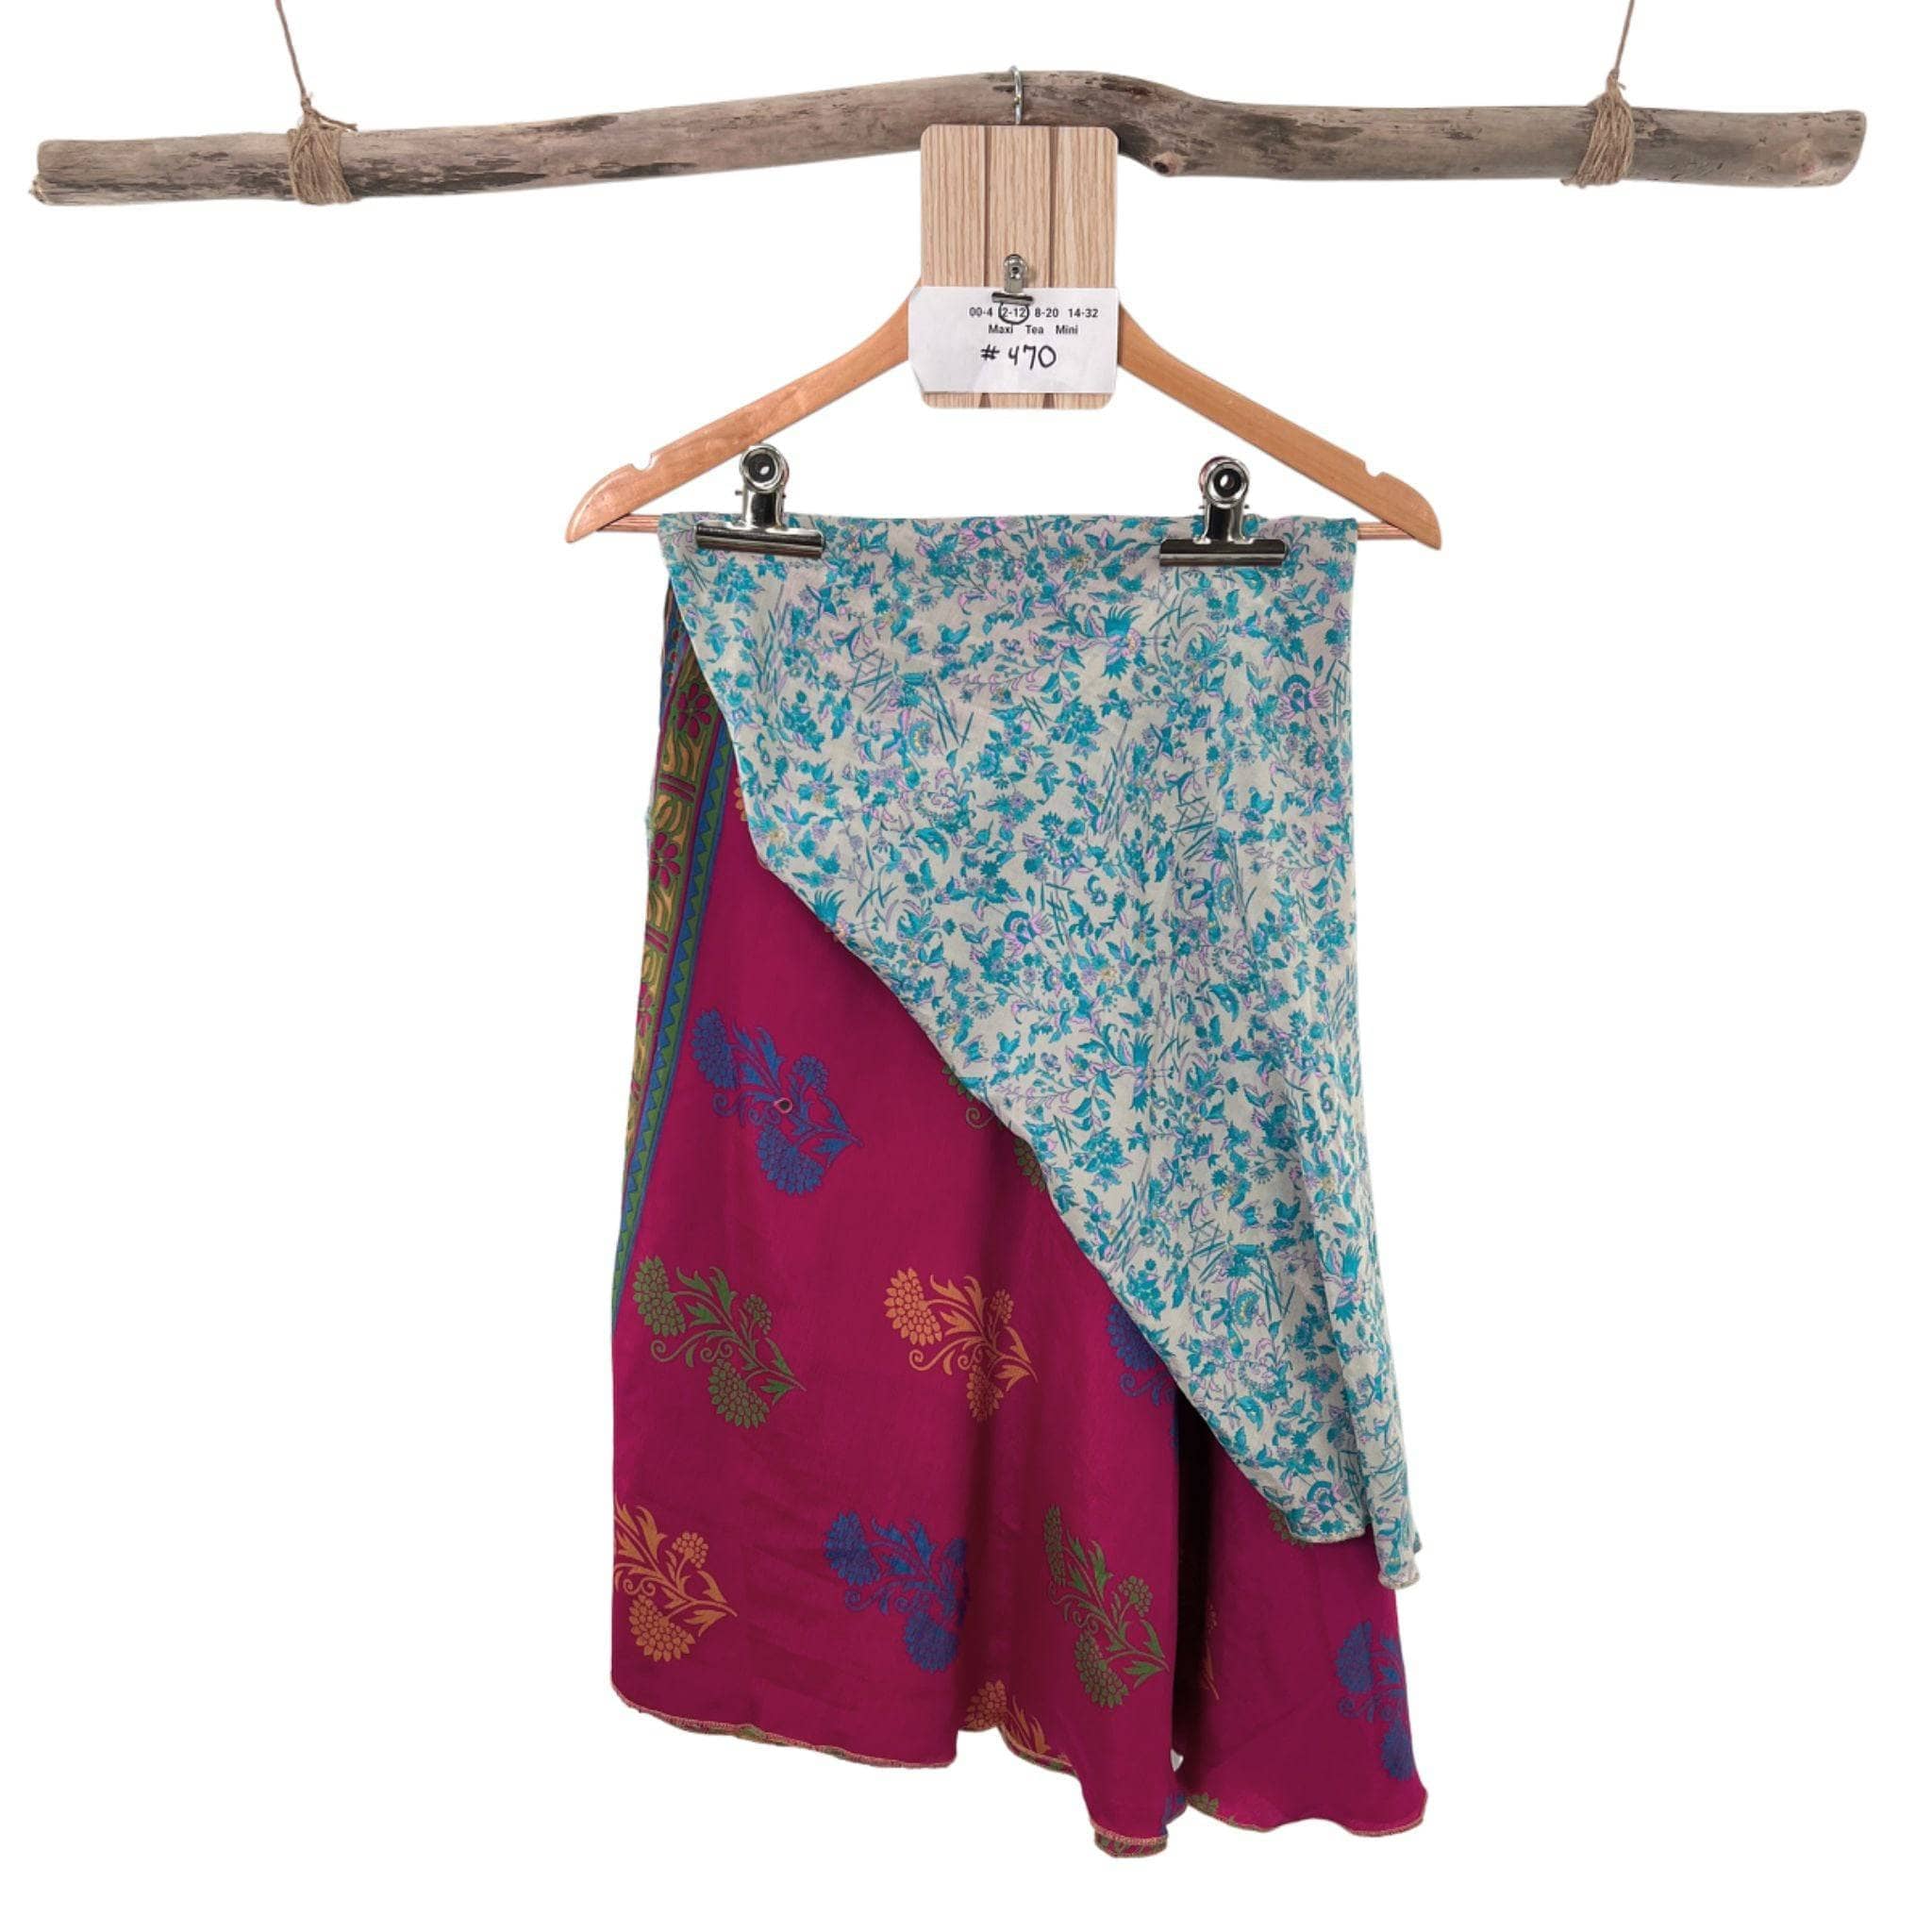 sari wrap skirt 2 12 tea length 470 eco friendly yarn crochet knit boho plus size womens clothing 282531